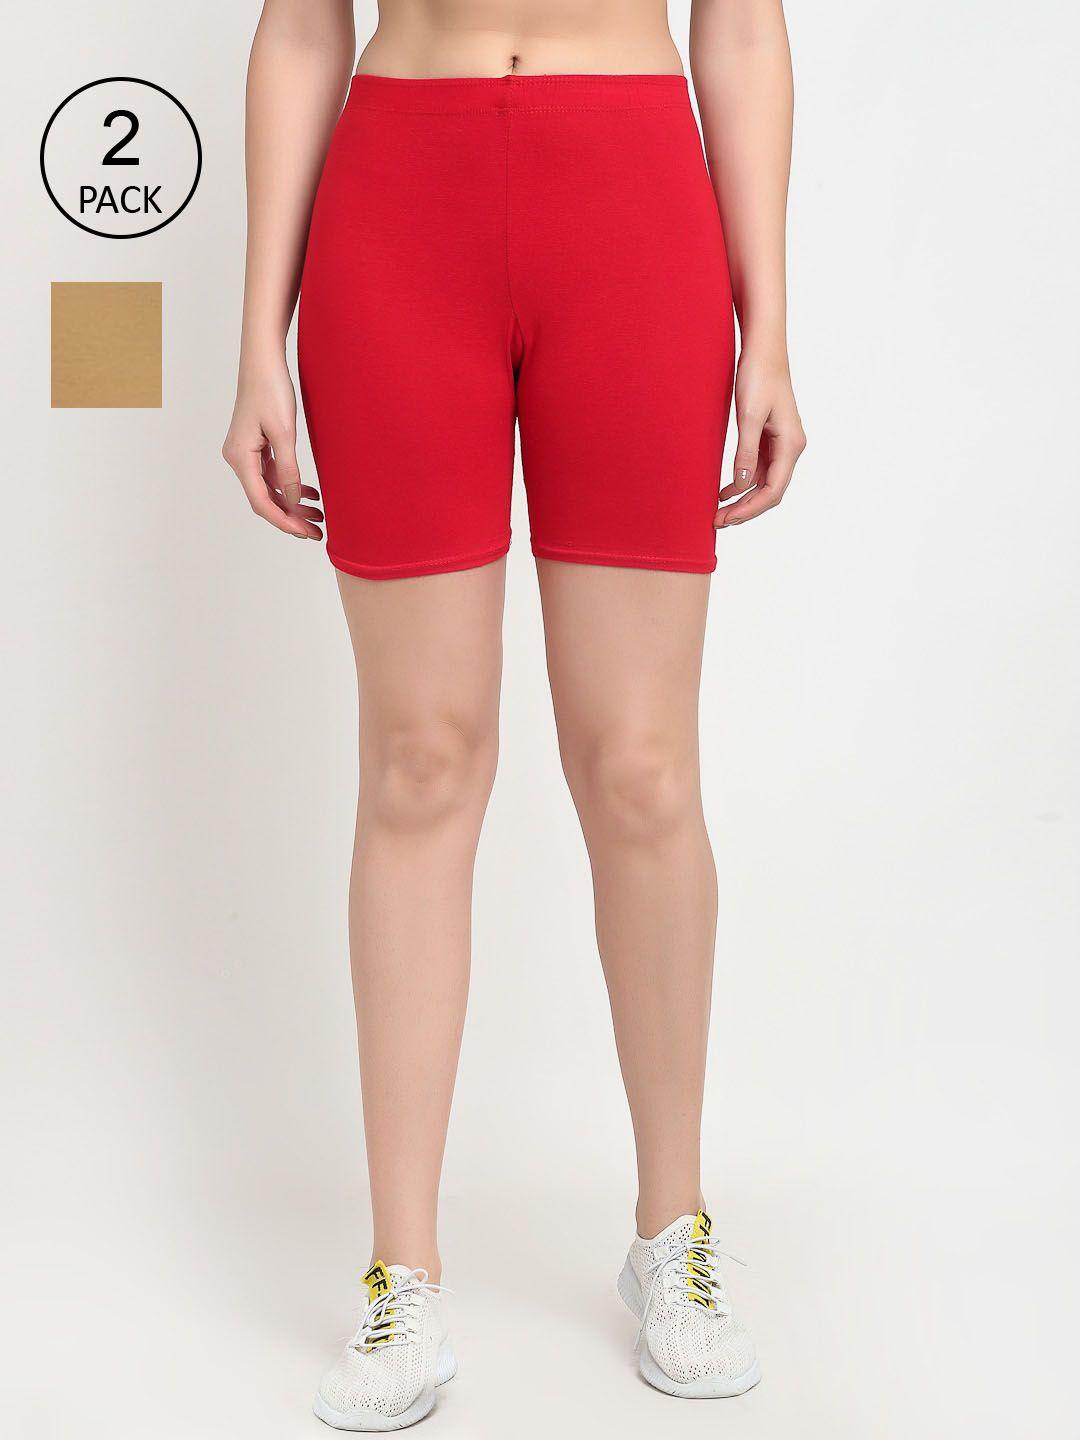 GRACIT Women Red Biker Shorts